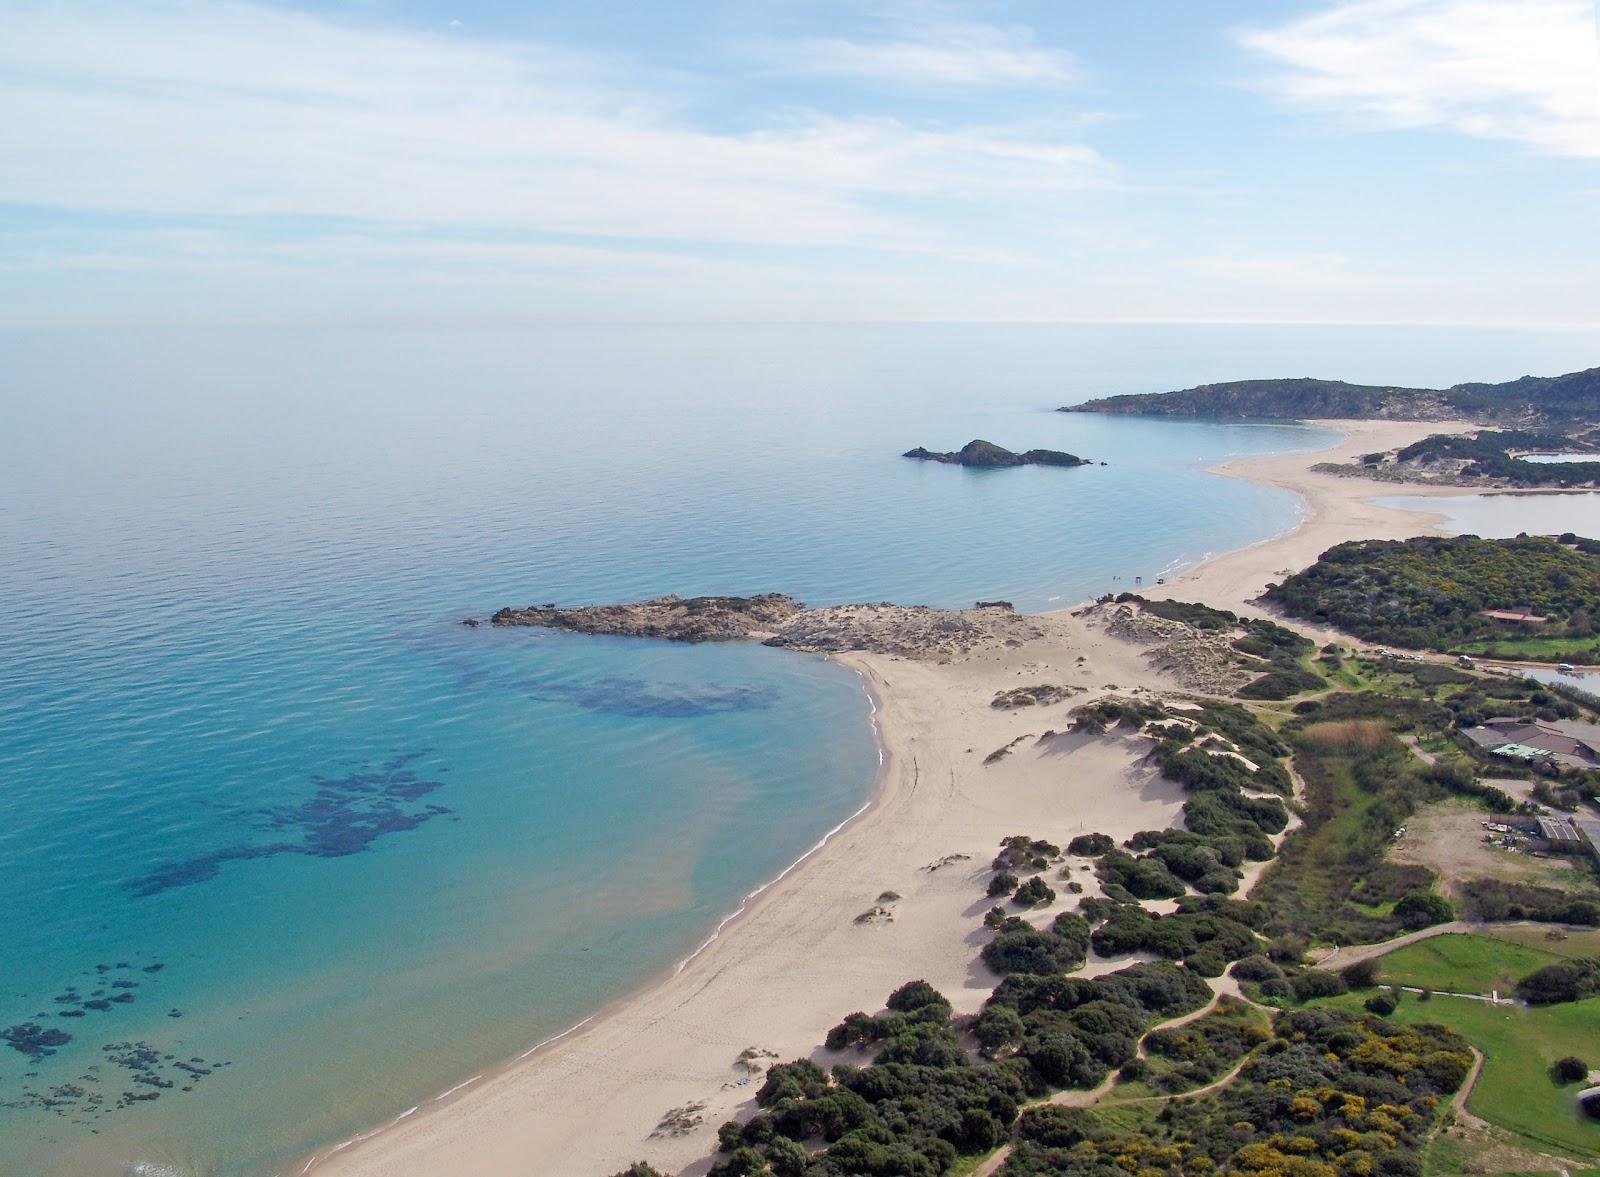 Sandee - Le Dune® Stabilimento Balneare - Chia - Sardegna